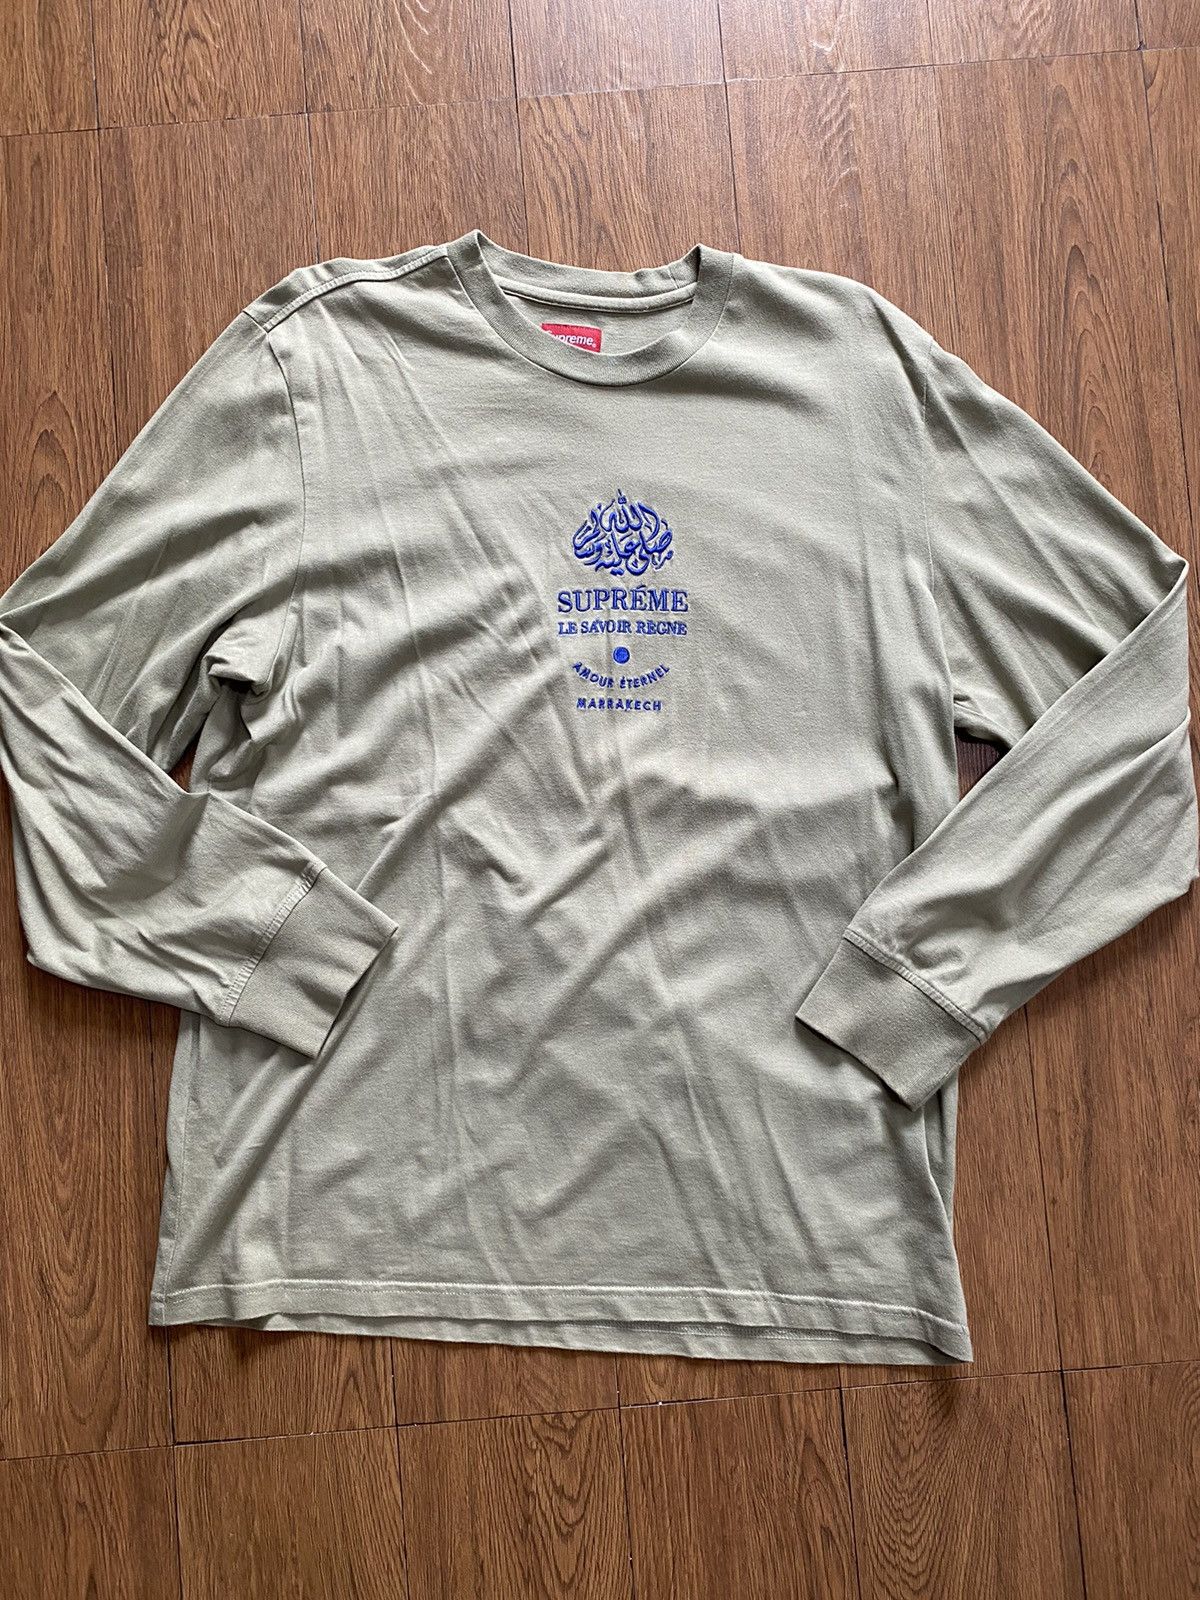 Supreme Supreme Long Sleeve Marrakech L/S Shirt | Grailed